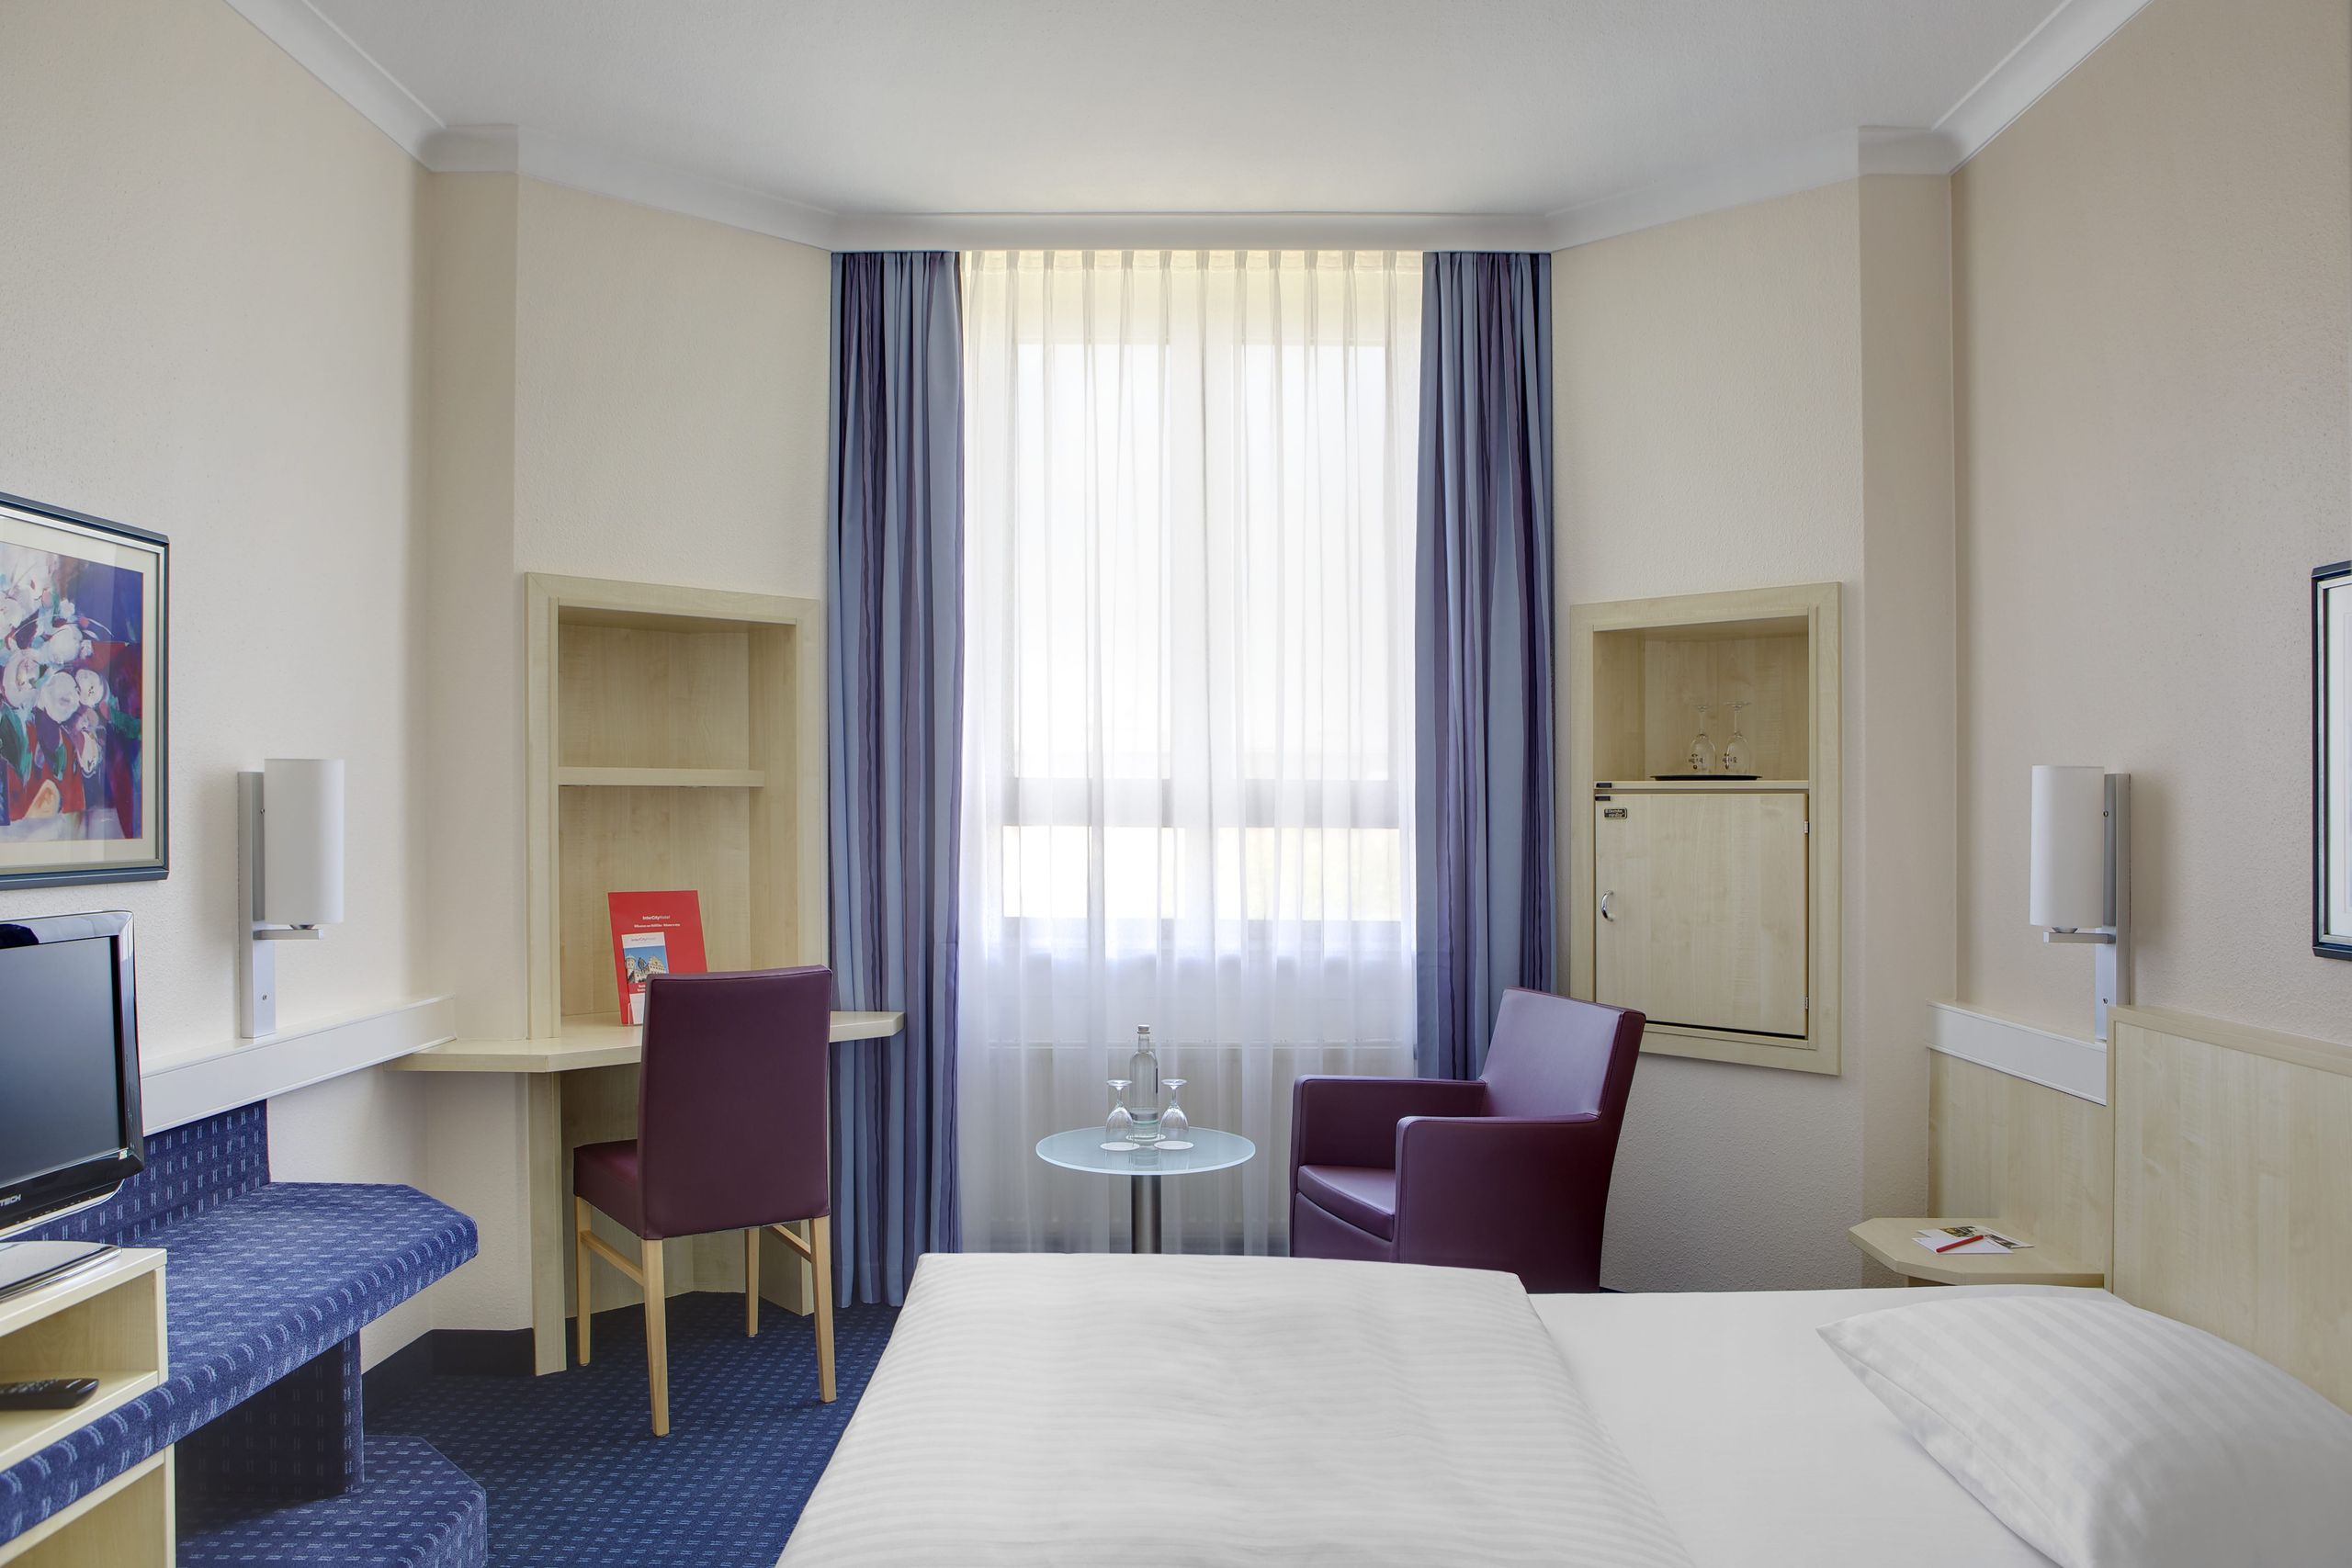 IntercityHotel Augsbourg - chambres d'hôtes